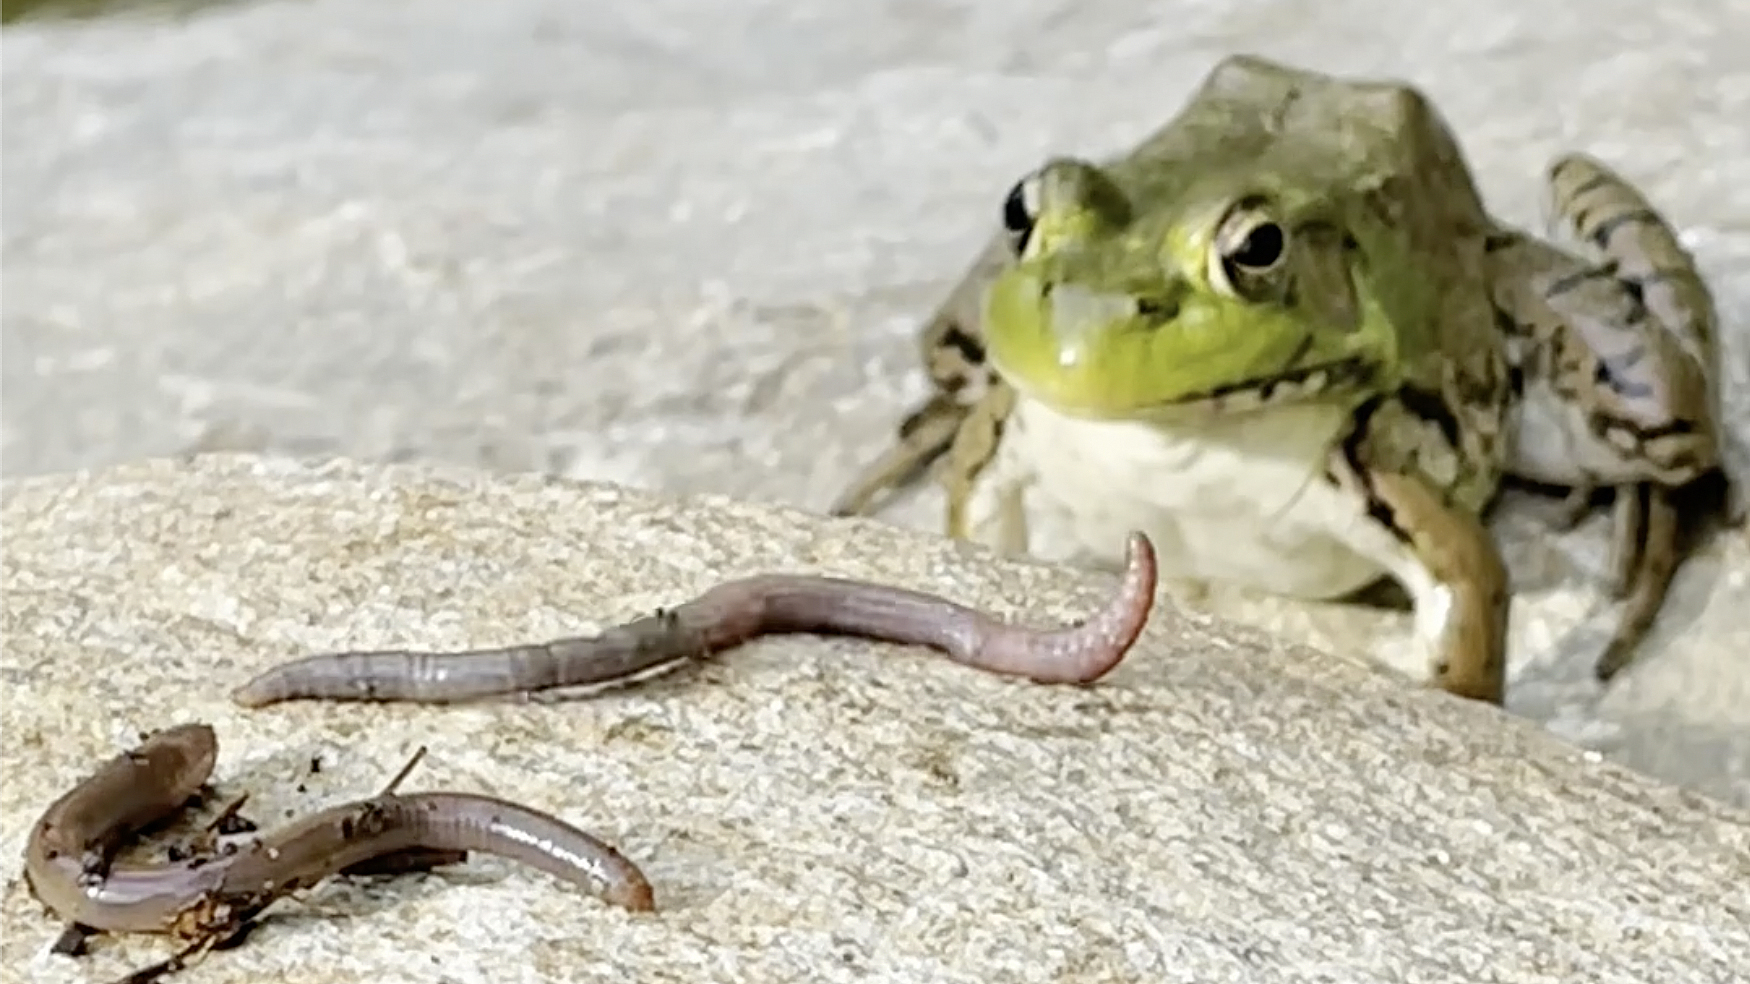 frog catching prey